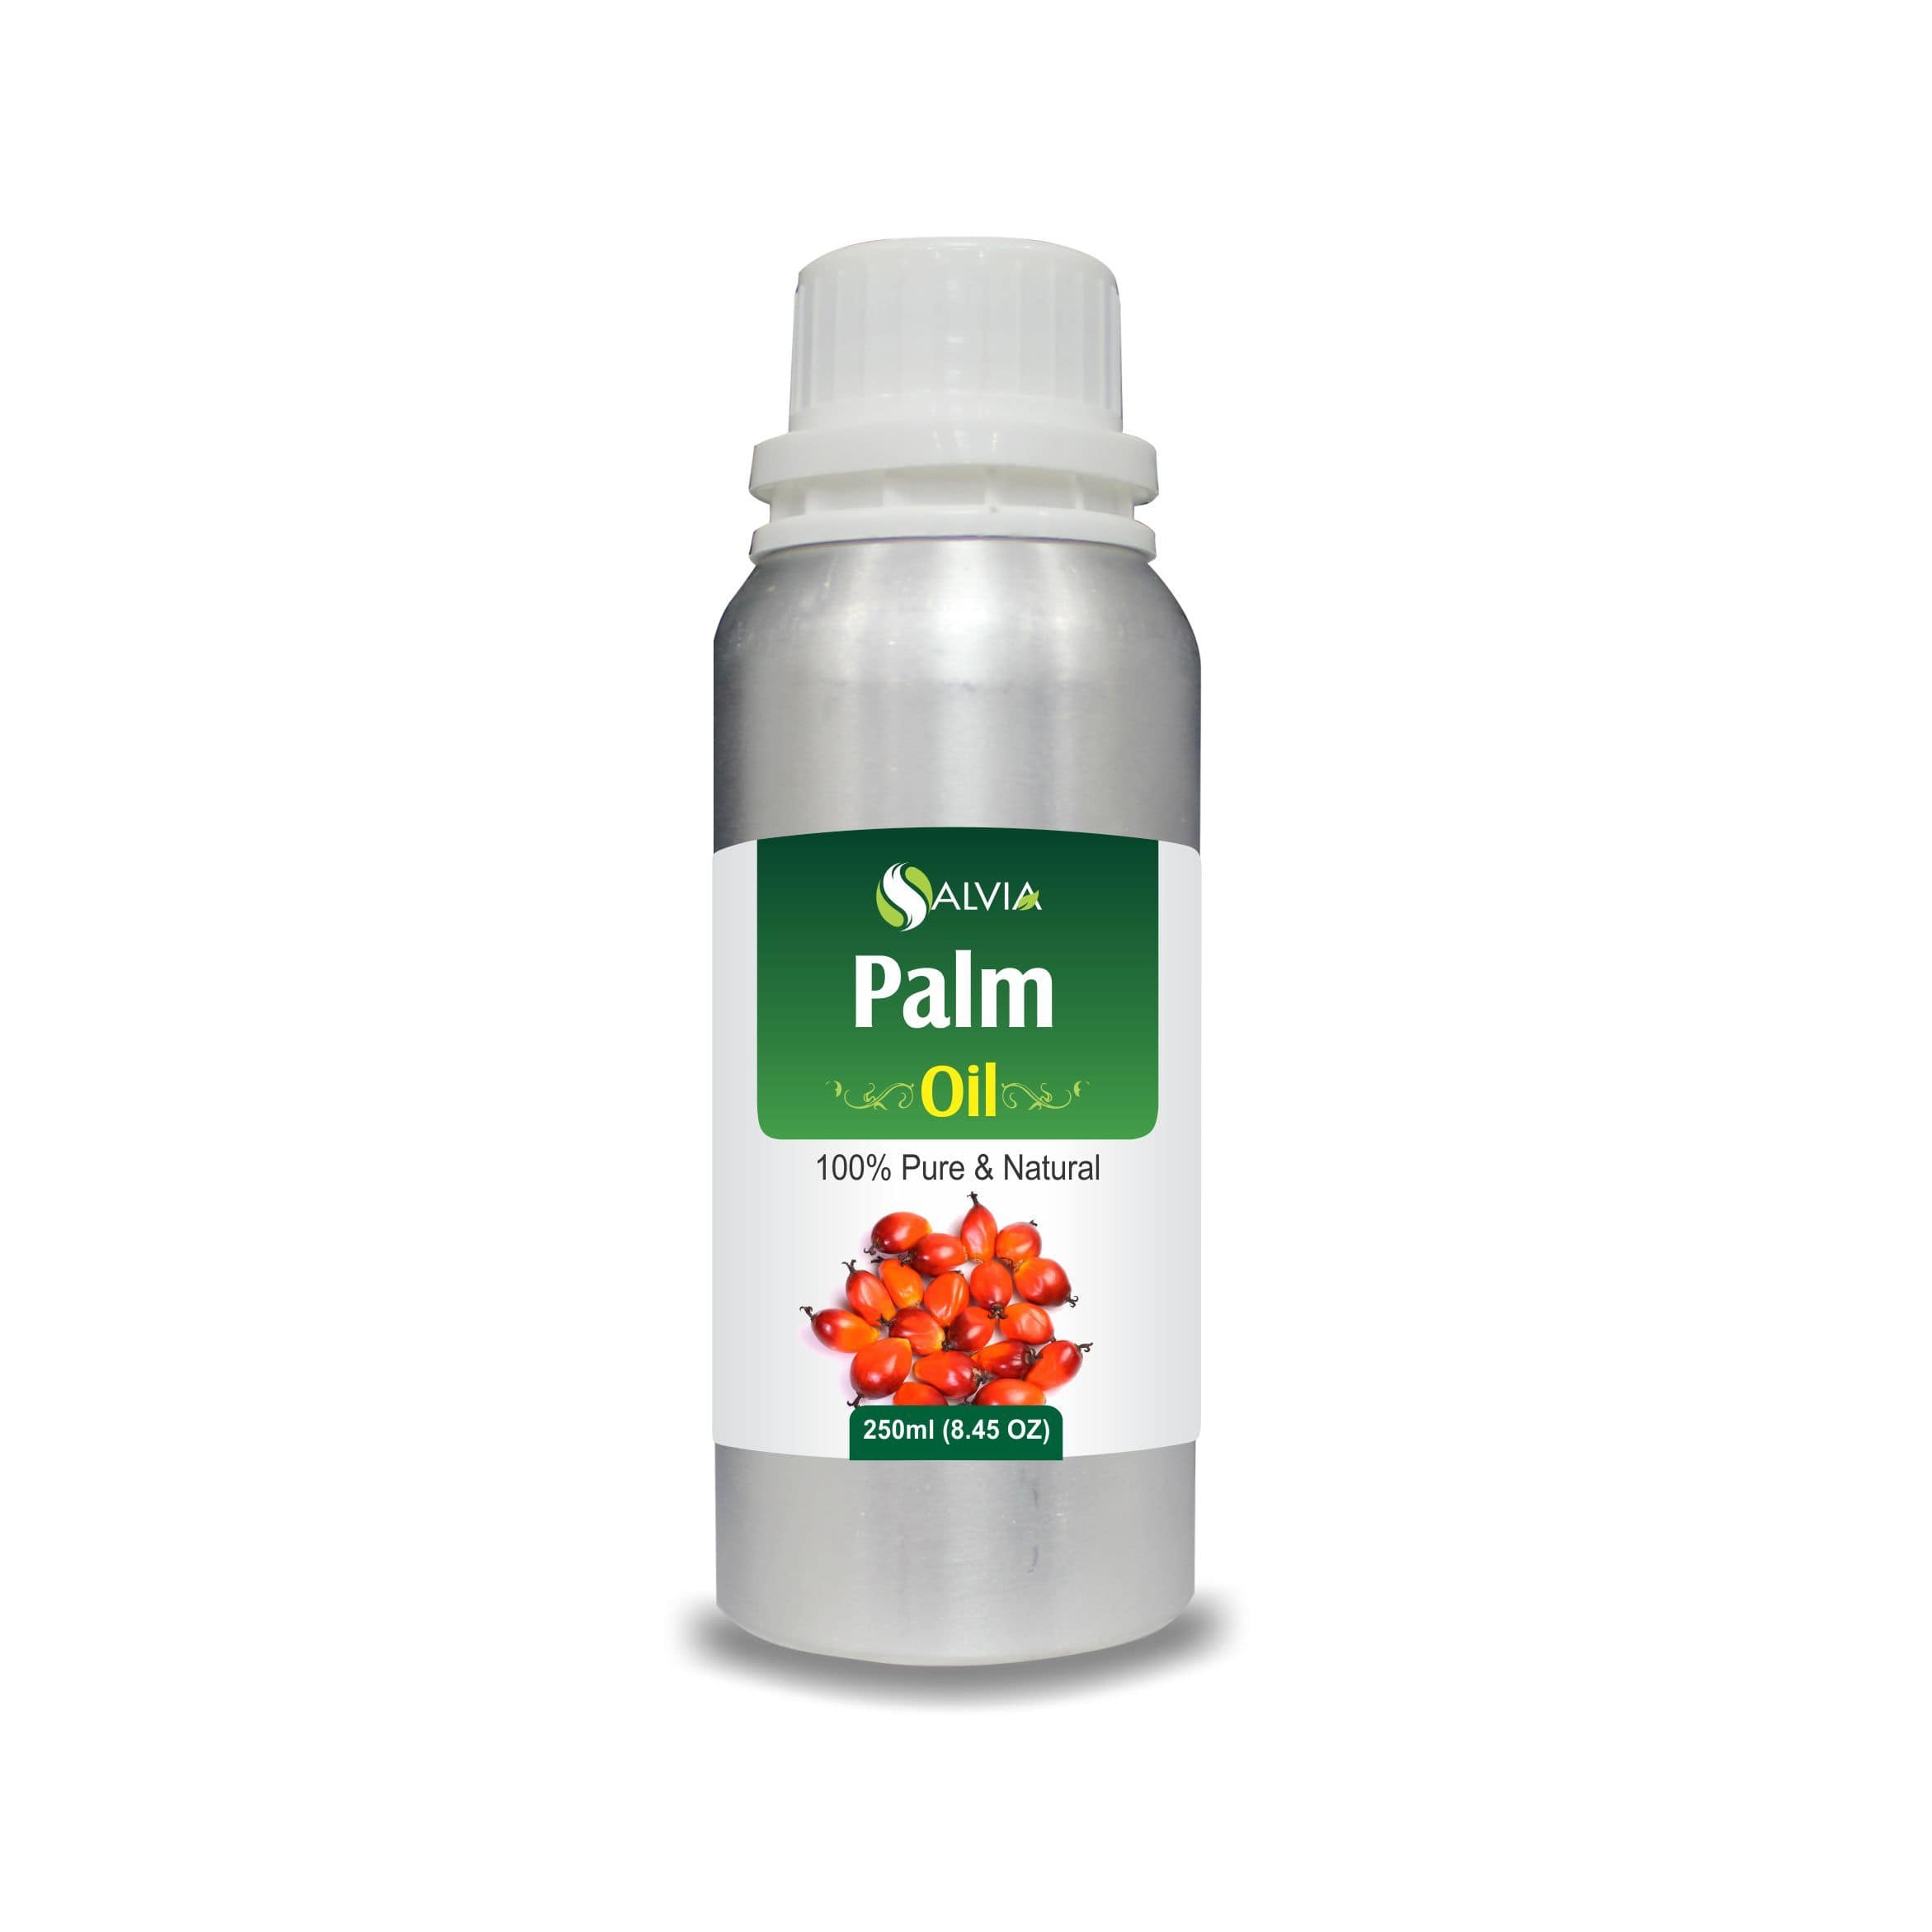 palm oil benefits